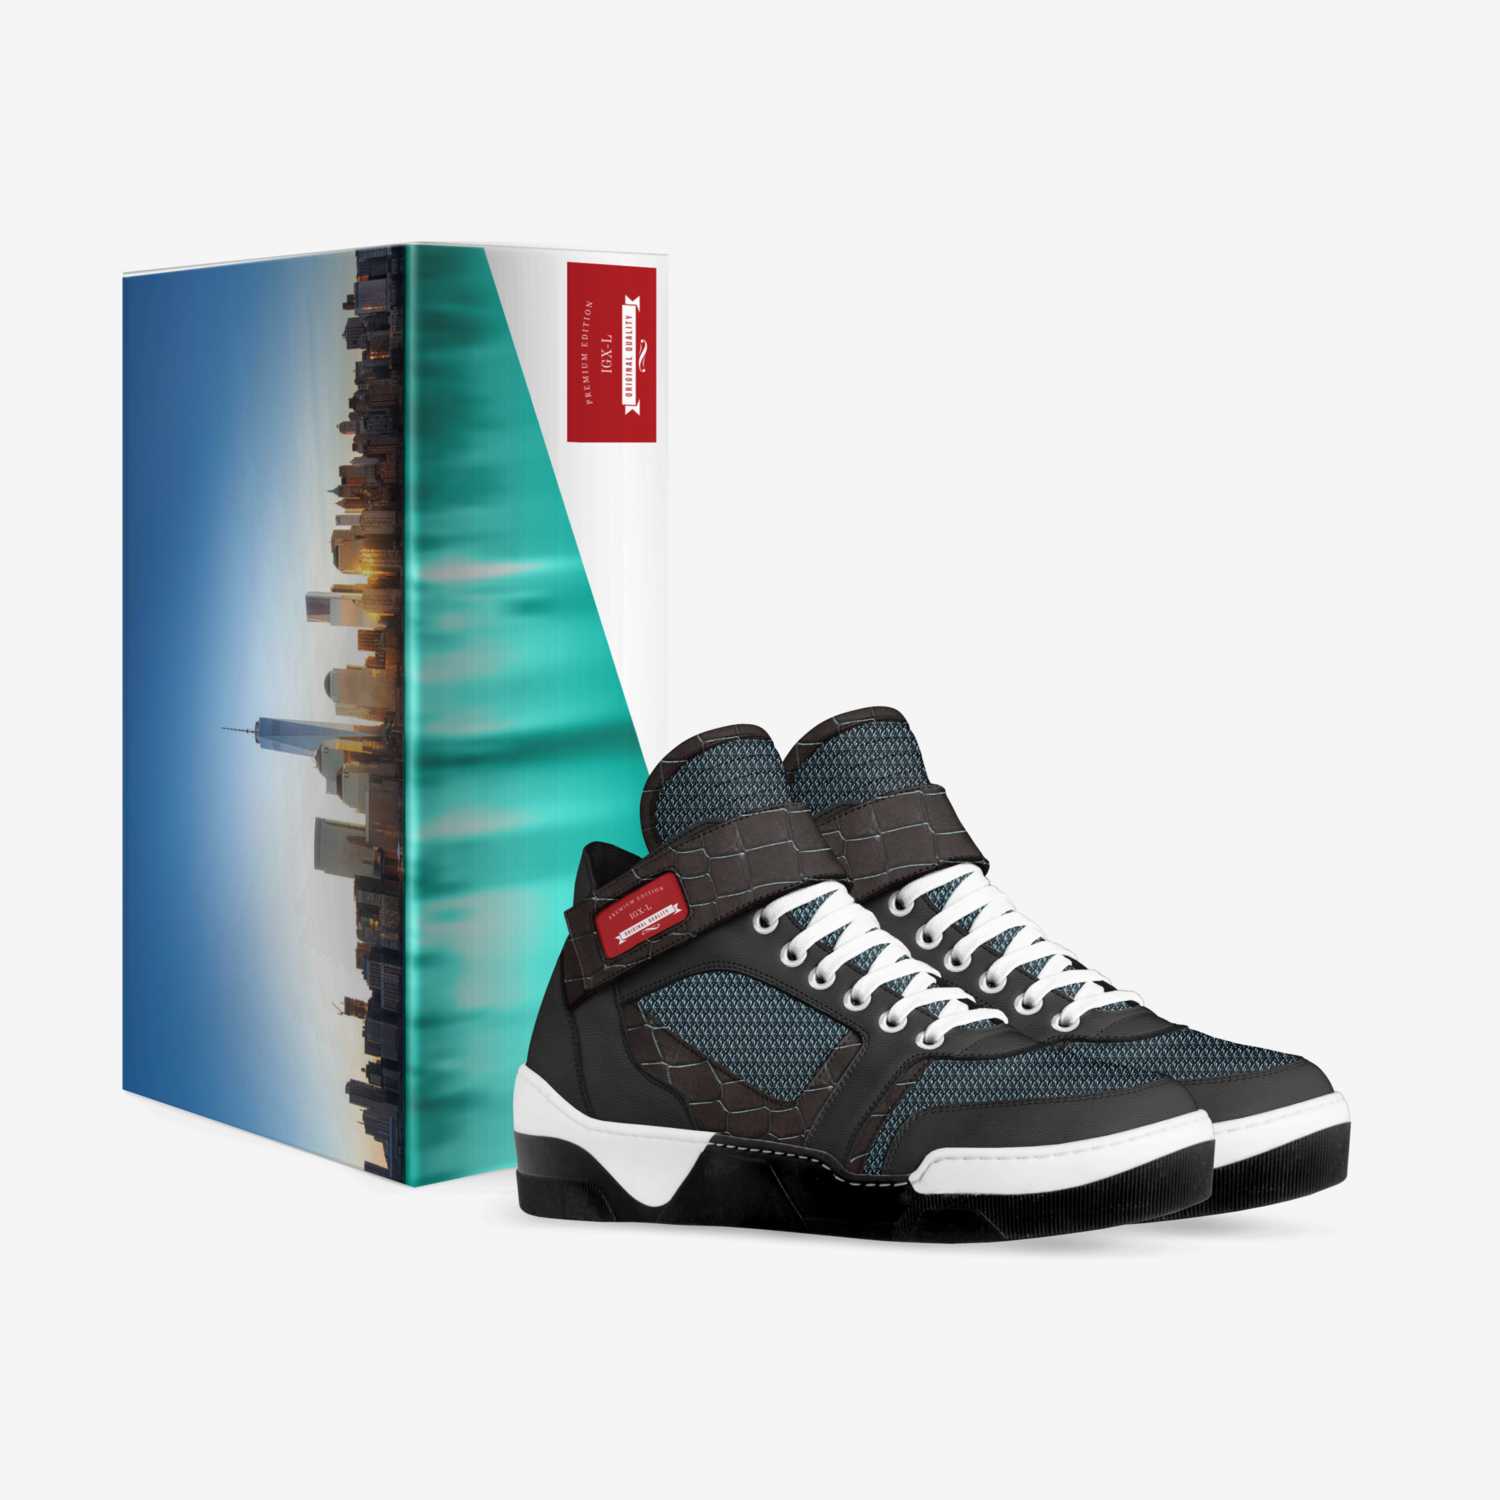 IGX-L | A Custom Shoe concept by Phoenix Wilkinson